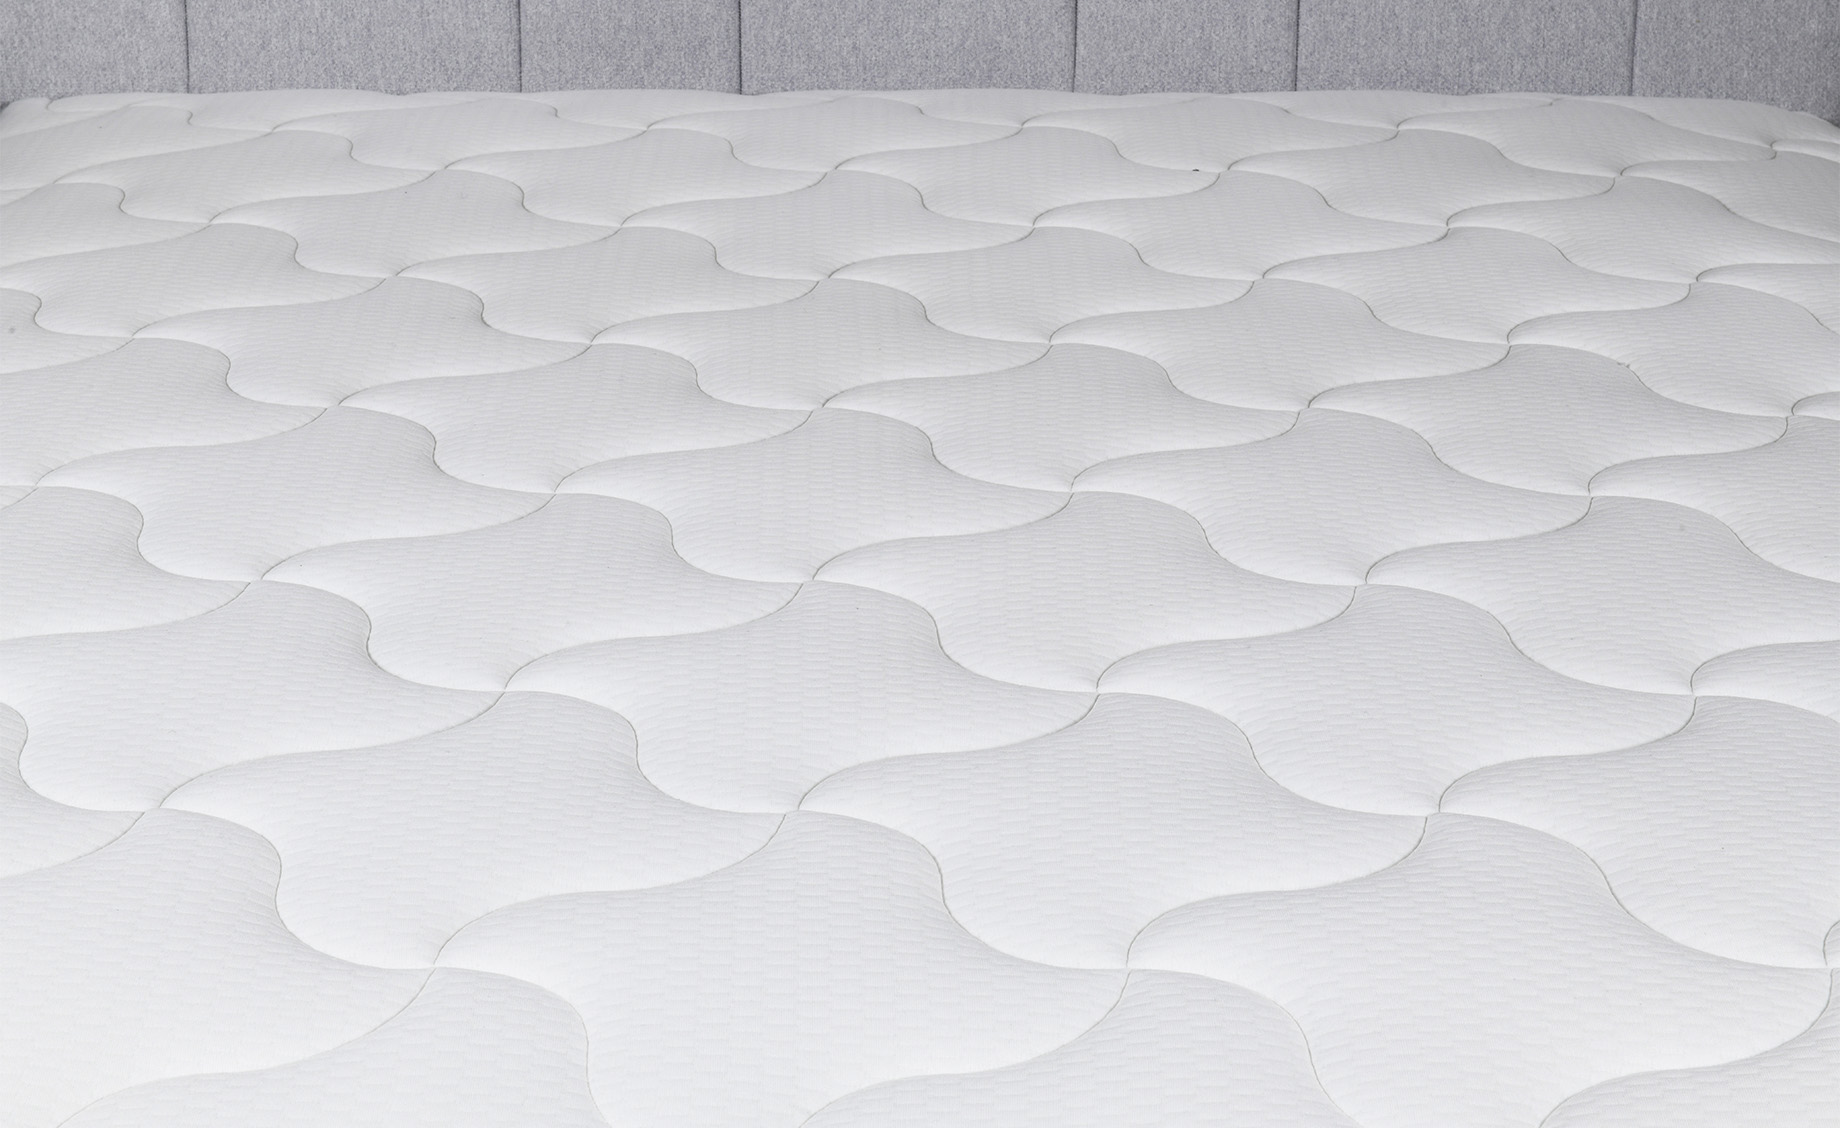 Reno krevet sa prostorom za odlaganje 164x214x115 cm boja leda